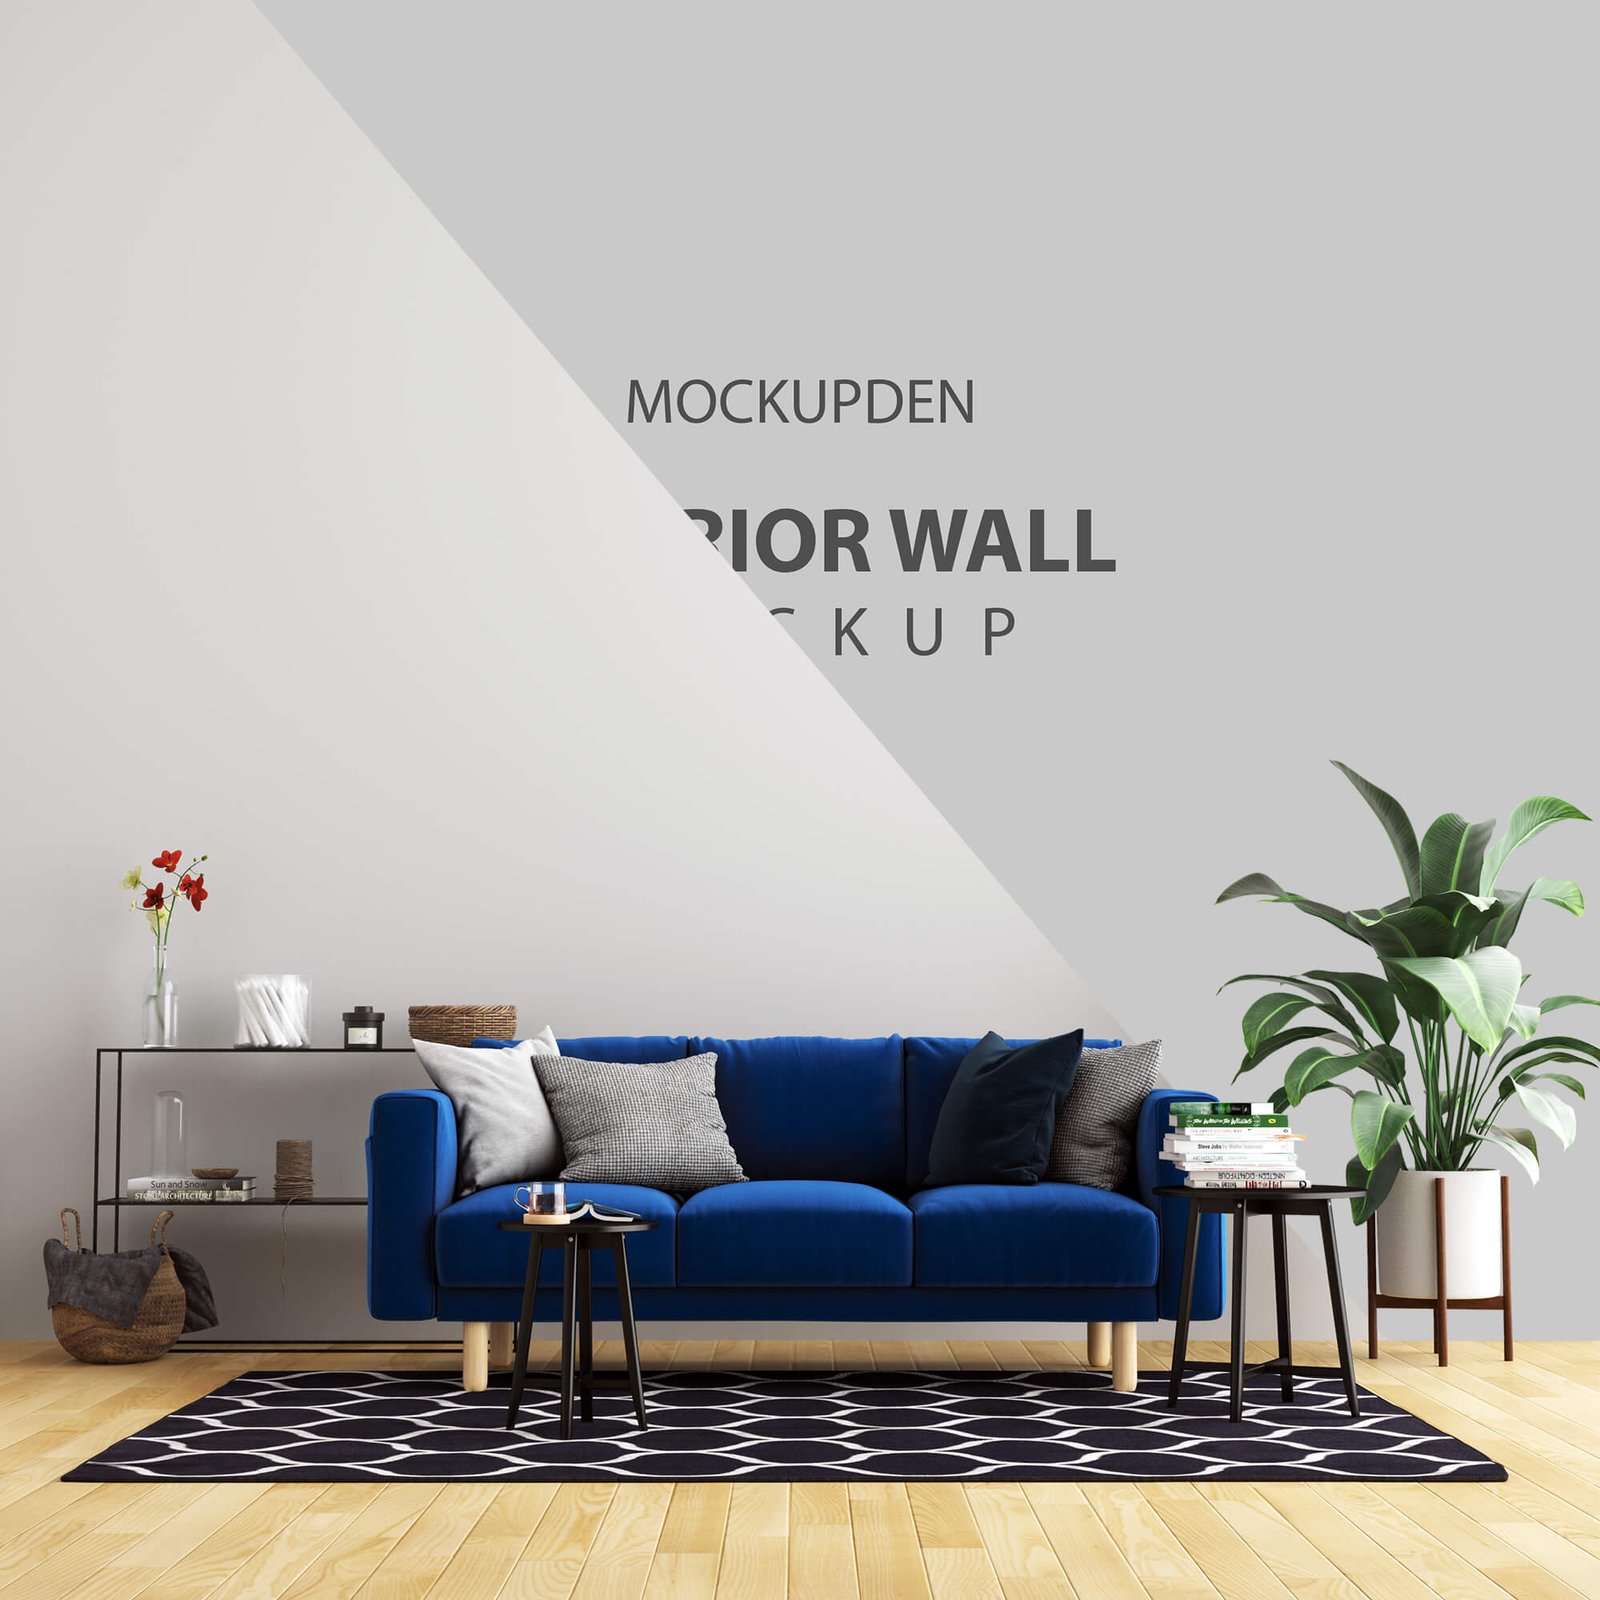 Editable Free Interior Wall Mockup PSD Template